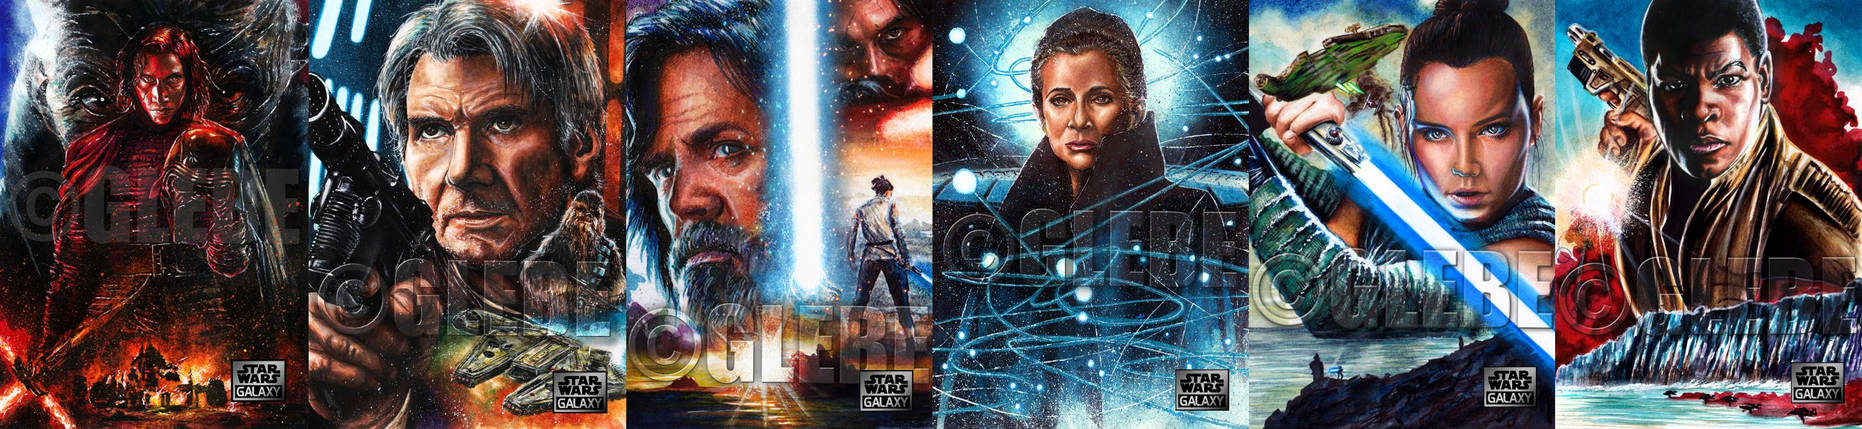 Star Wars Galaxy 2018: Legends by Glebe